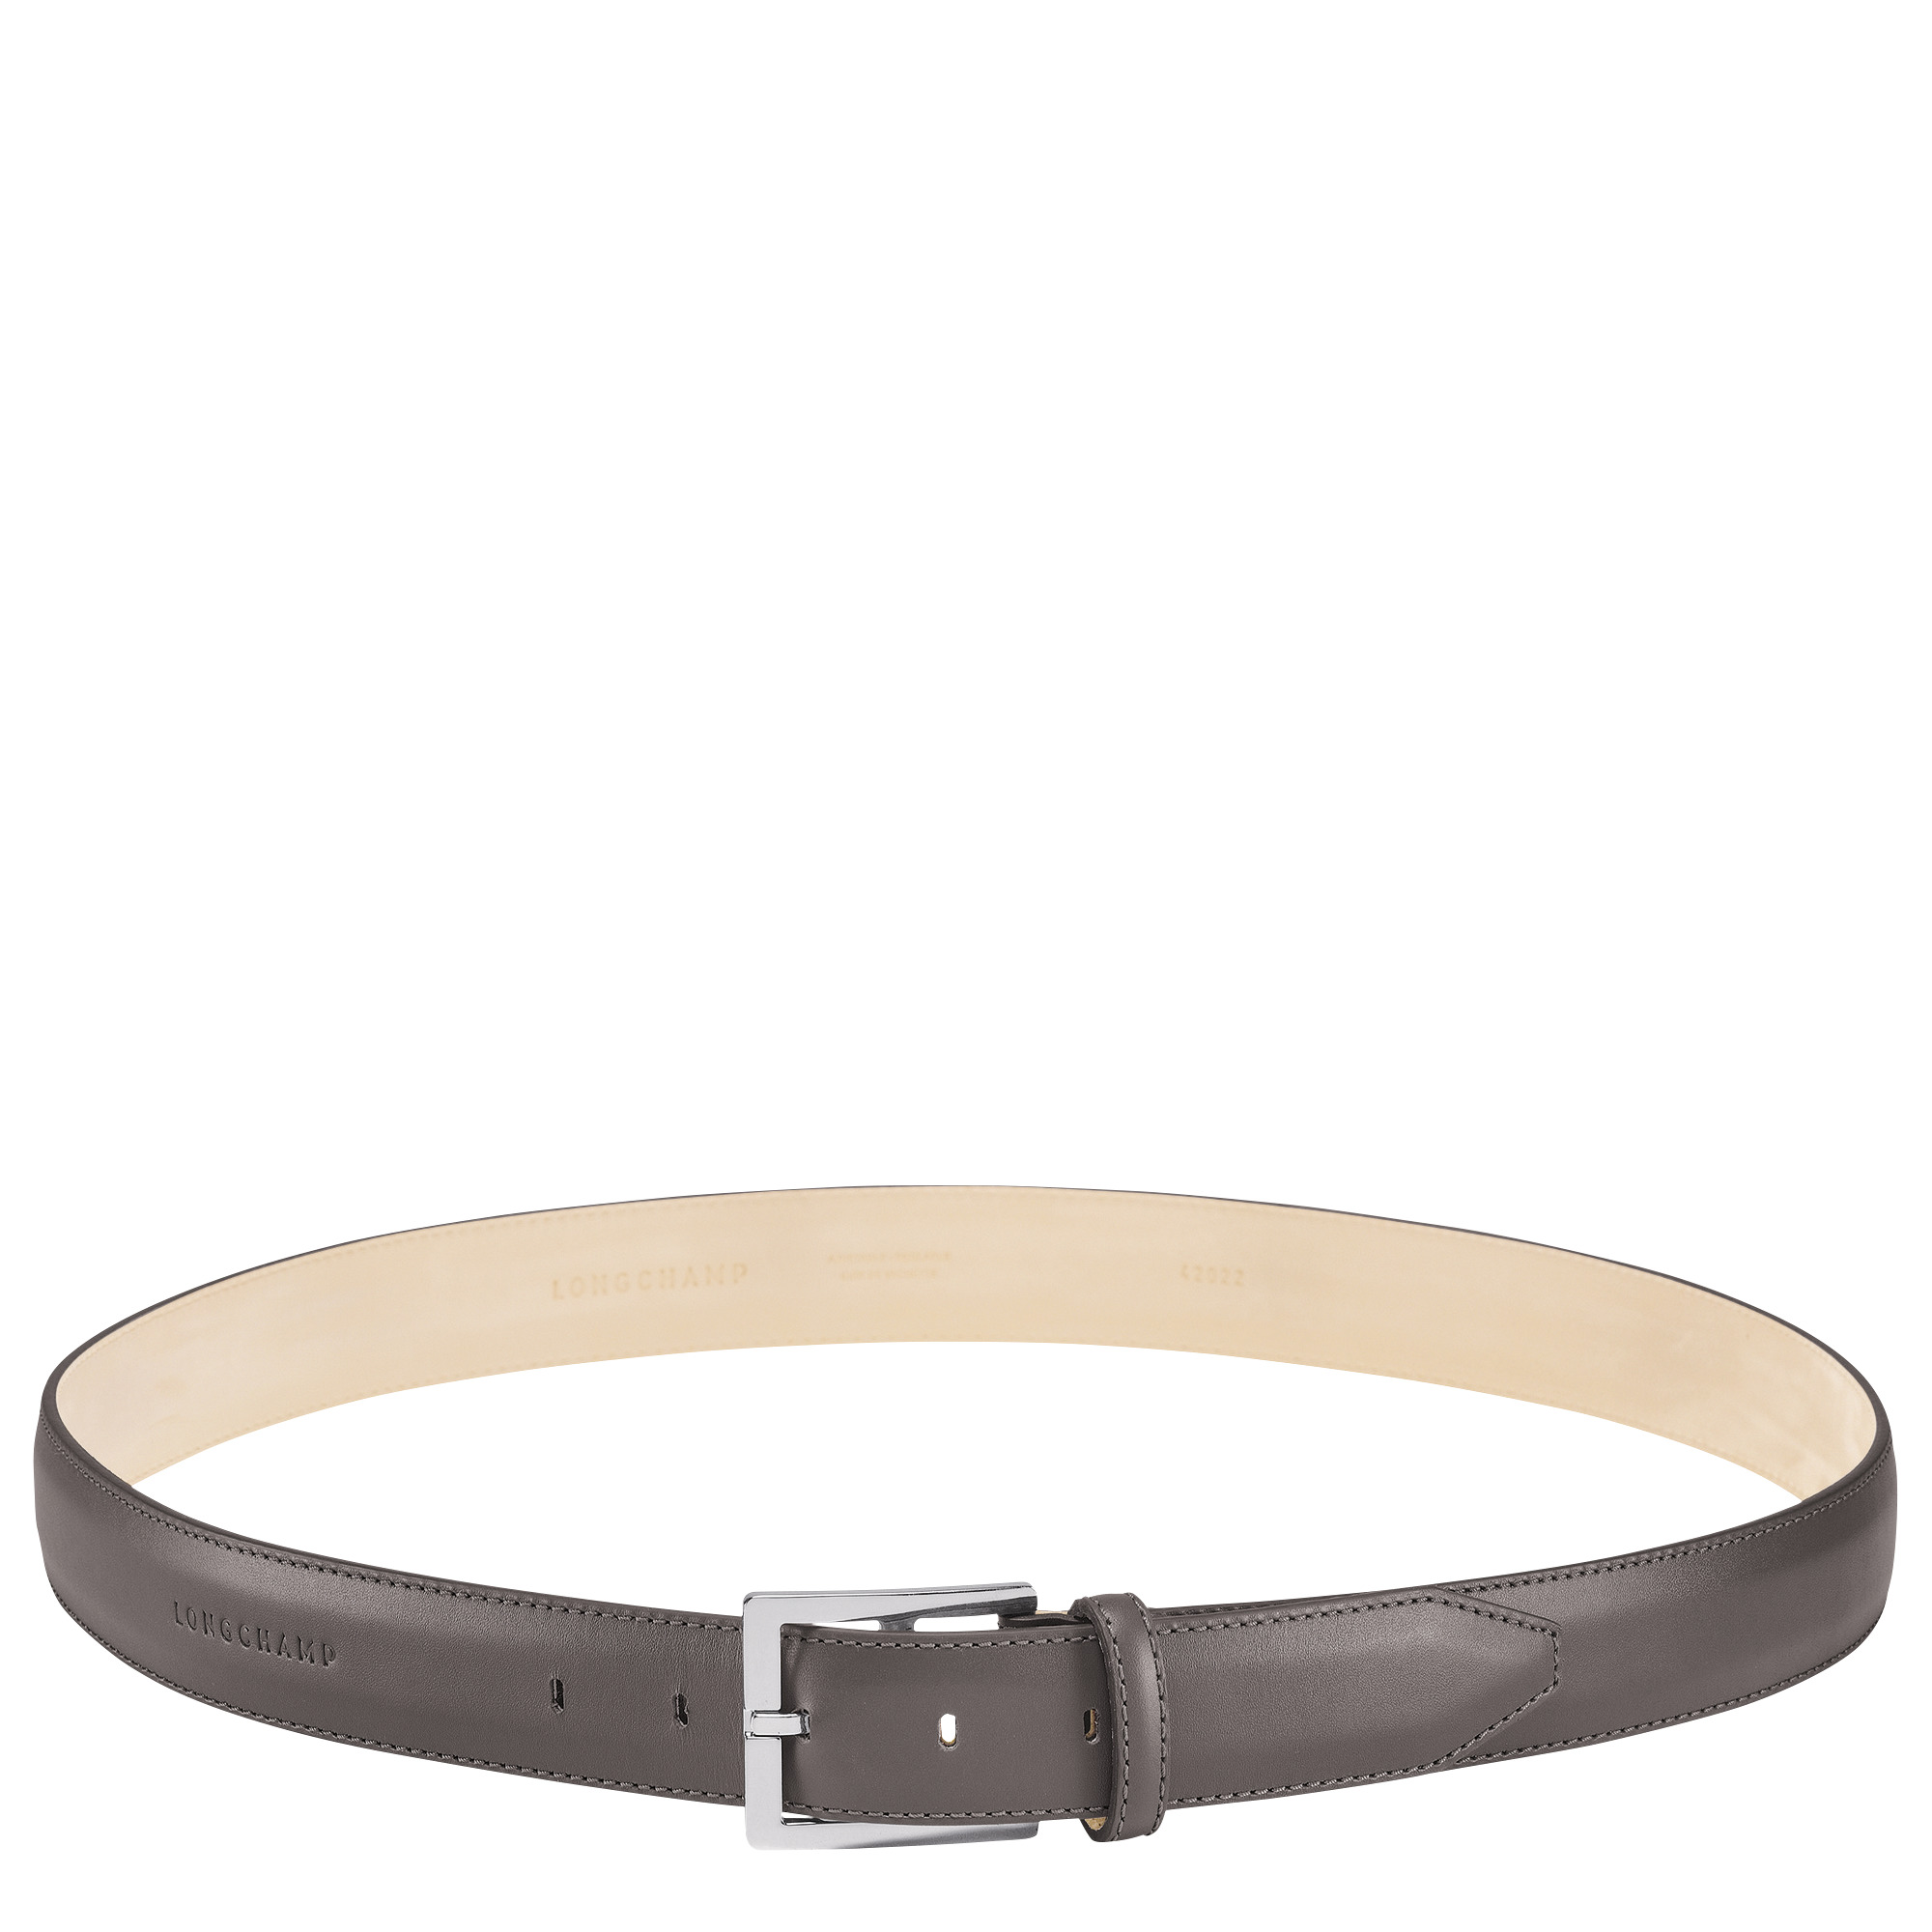 Végétal Men's belt Grey - Leather - 1